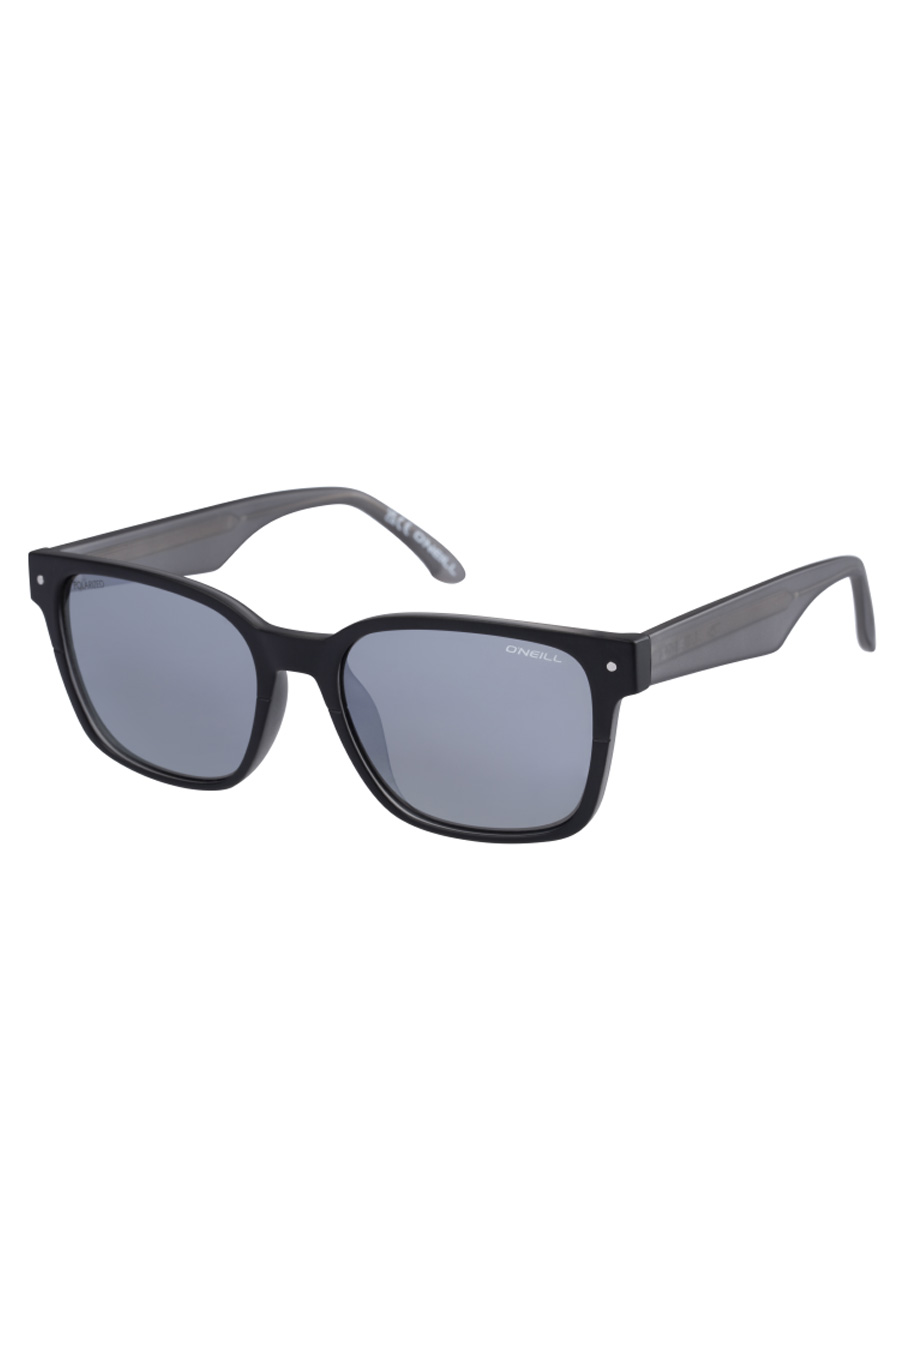 Sunglasses ONEILL ONS-9007-20-104P